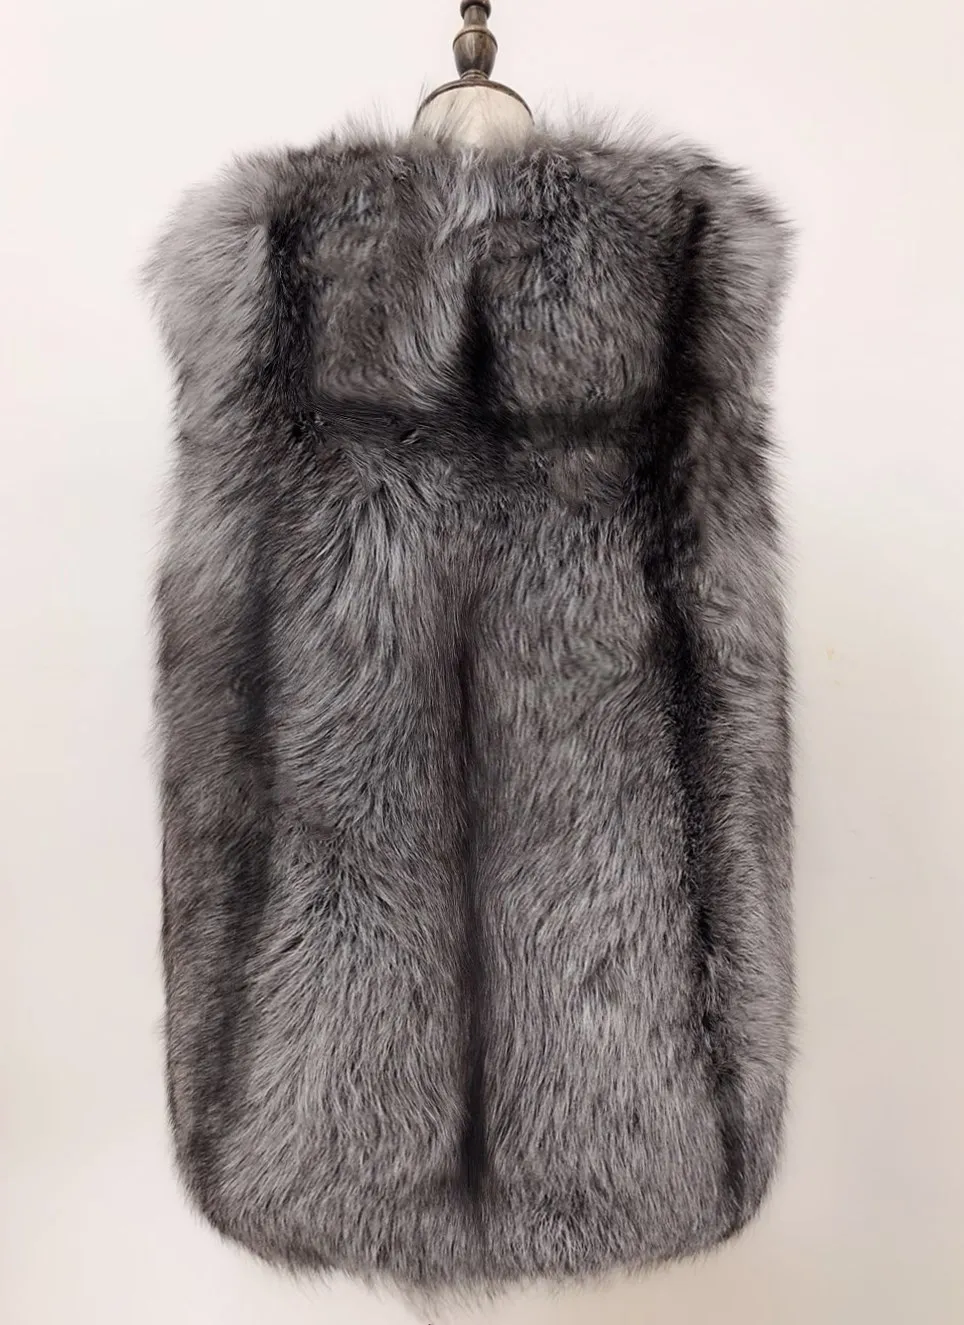 Real Fox Fur Vest Wholeskin Luxury Silver Fox Fur Jacket Thick Warm Natural Fur Gilet Luxury Fashion Sleeveless Coat enlarge